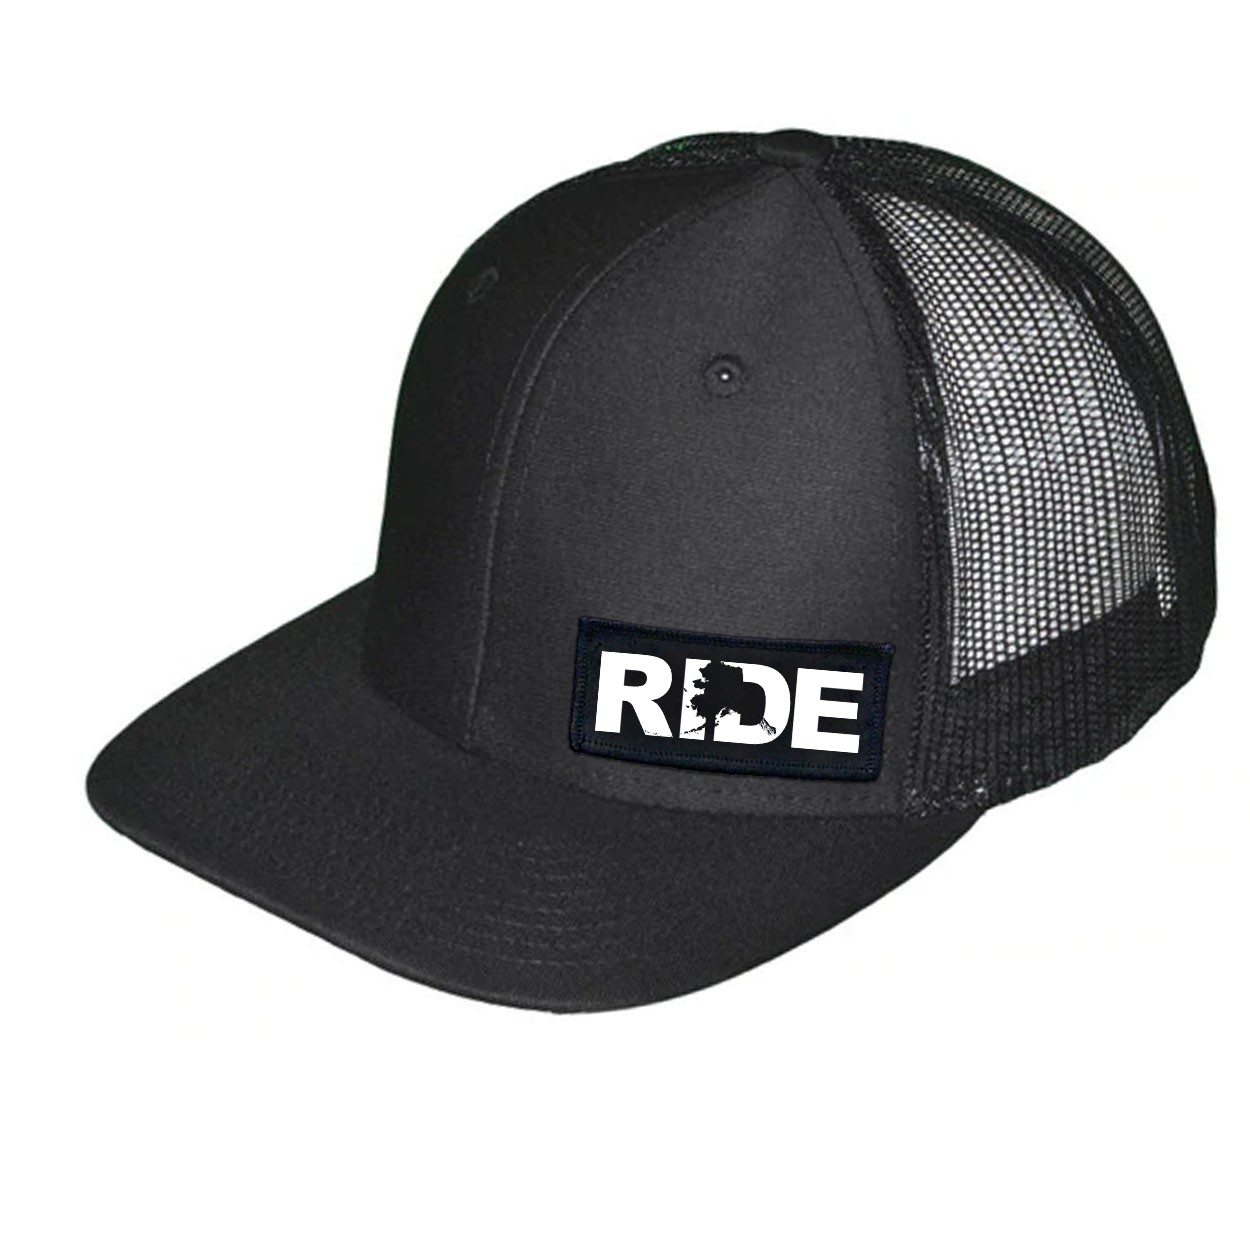 Ride Alaska Night Out Woven Patch Snapback Trucker Hat Black (White Logo)